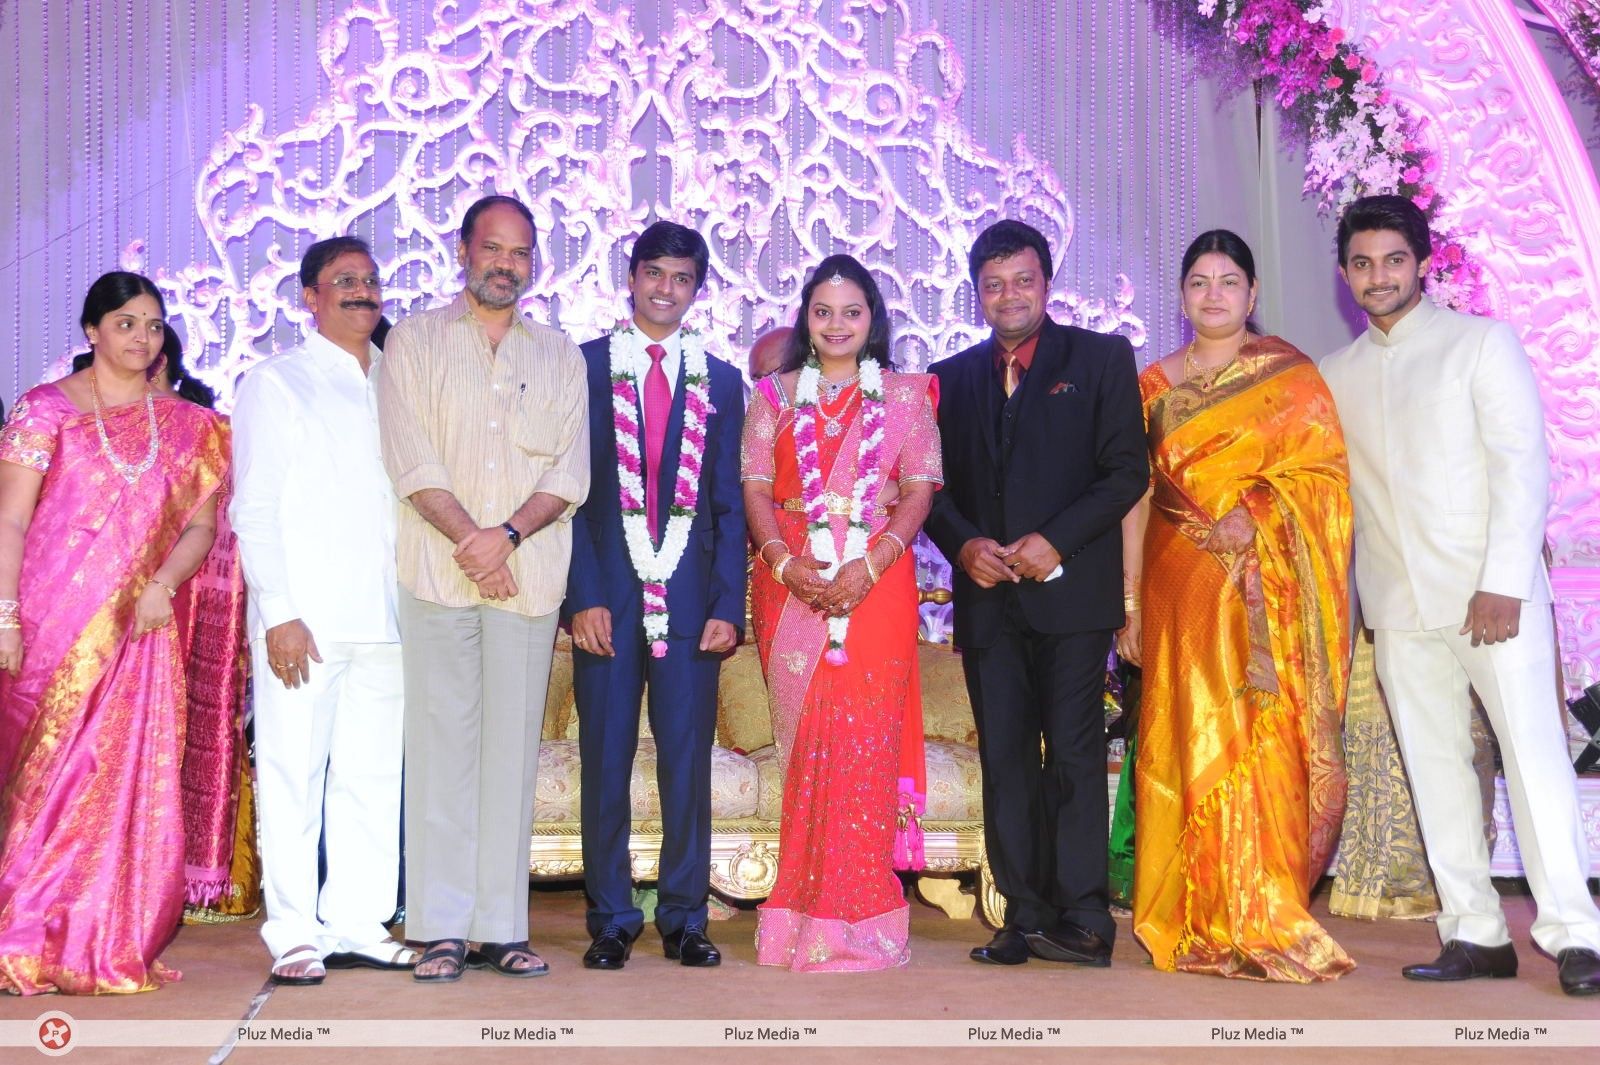 Saikumar Daughter Wedding Reception Photos | Picture 247704